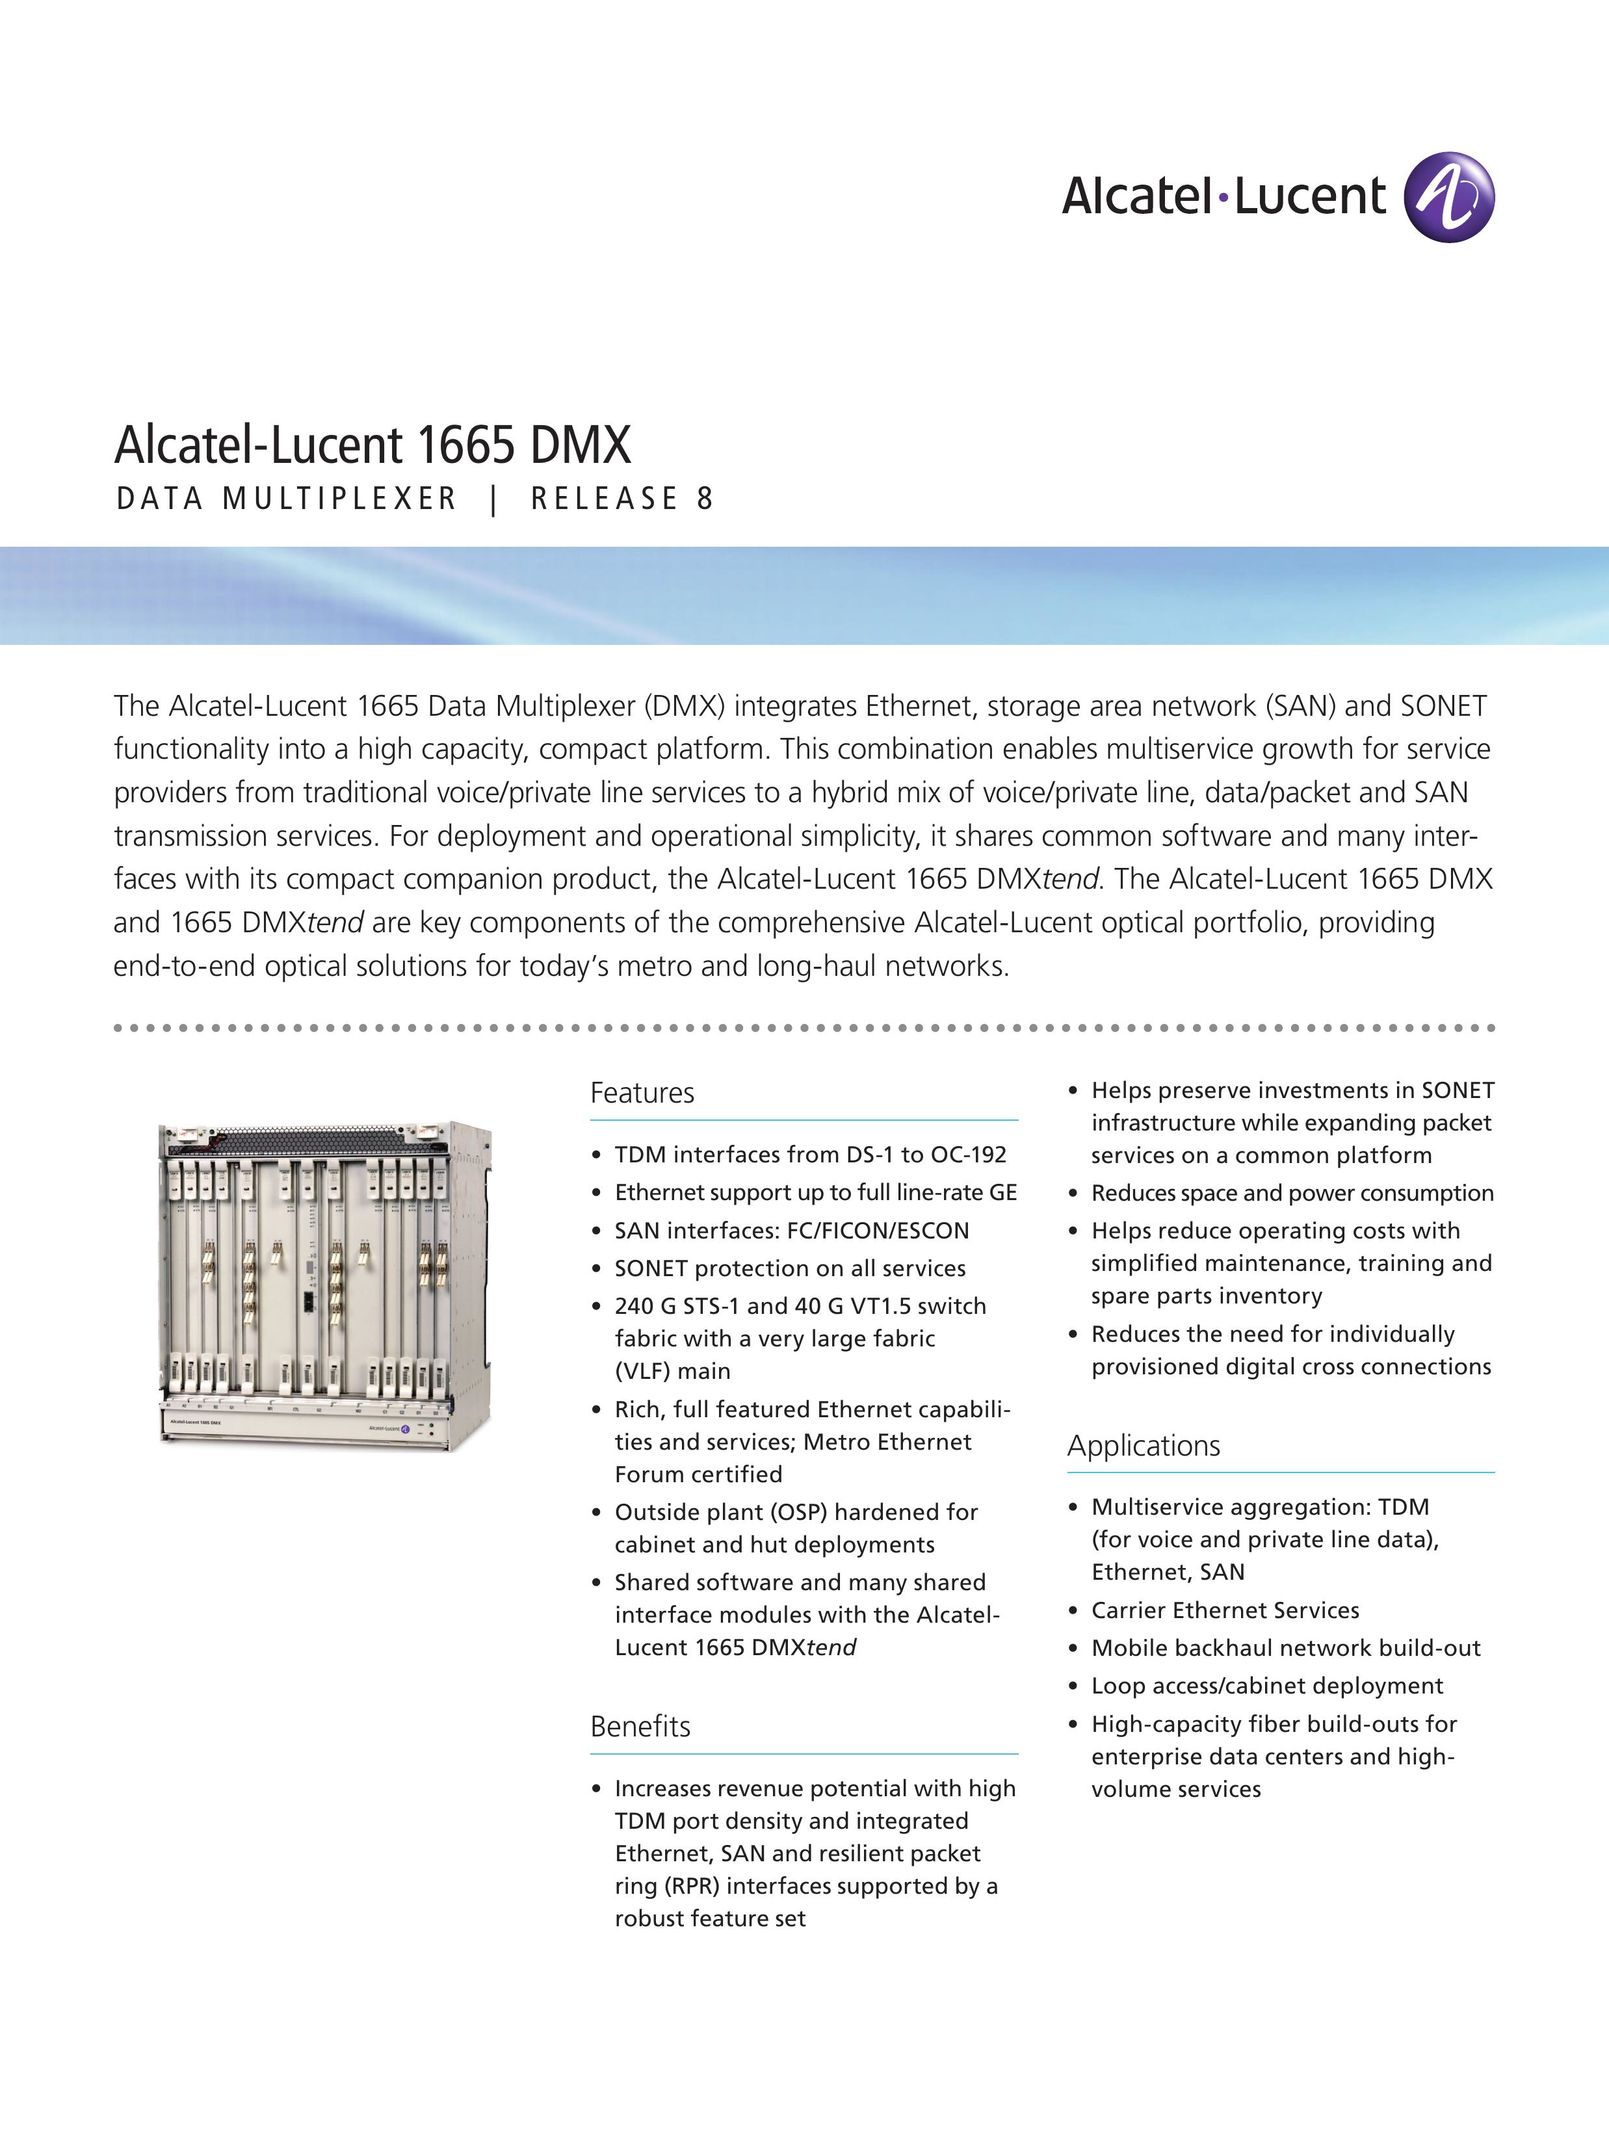 Alcatel-Lucent 1665 DMX Network Card User Manual